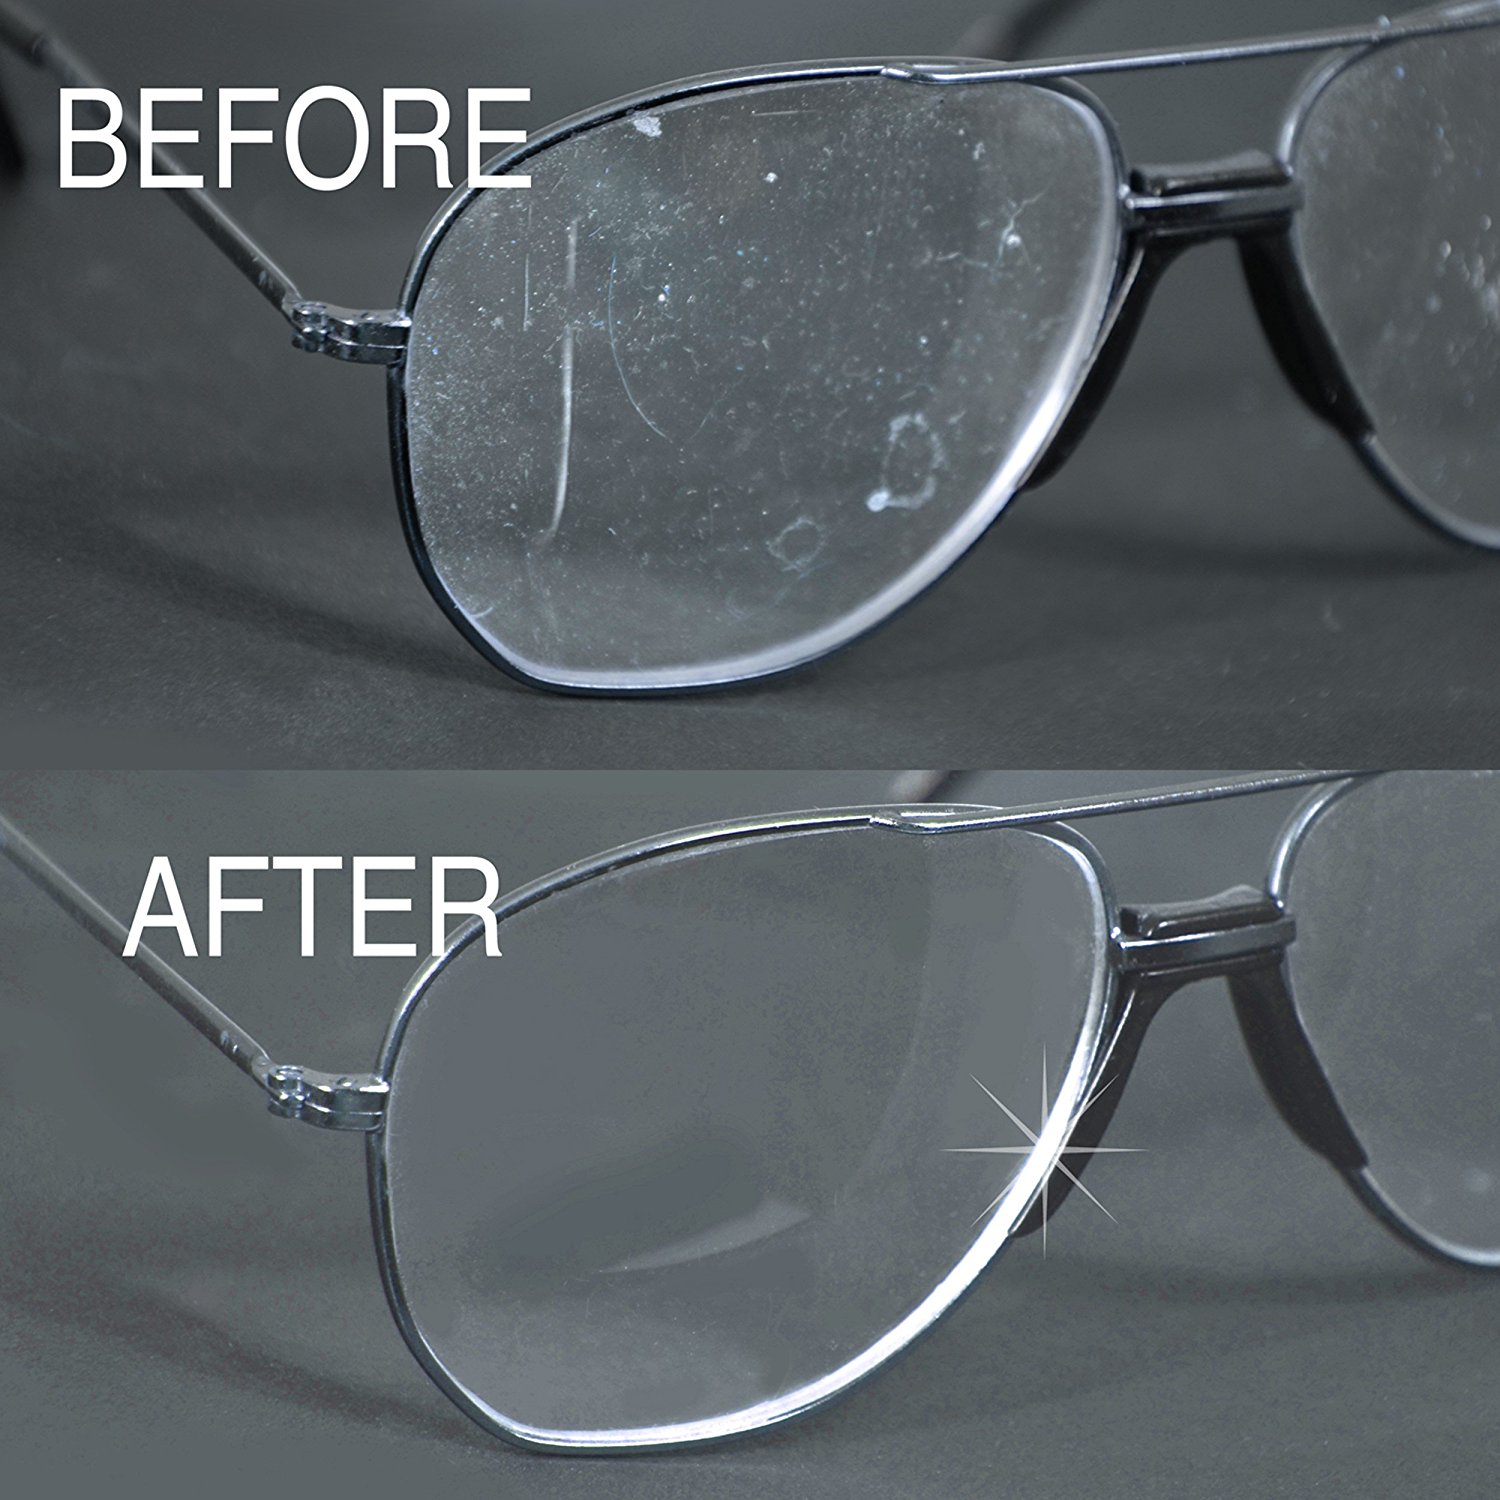 Amazon.com: EZR Eyeglass Cleaner & Scratch Repair Kit.The Best ...